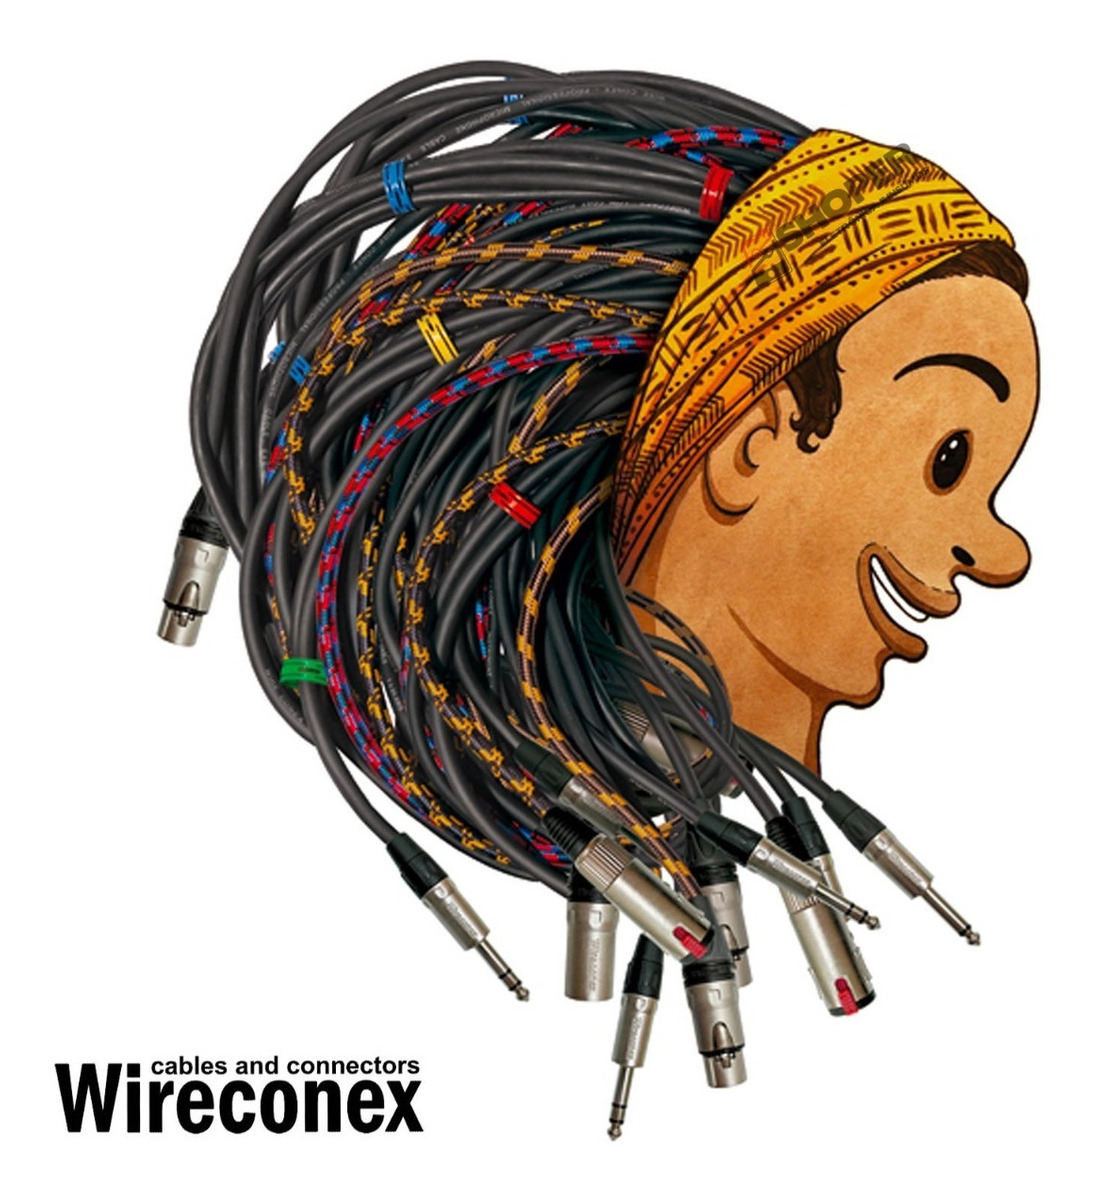 Kit 6 Plug Conector P10 6,3mm Mono Linha Wc 1112 Wireconex